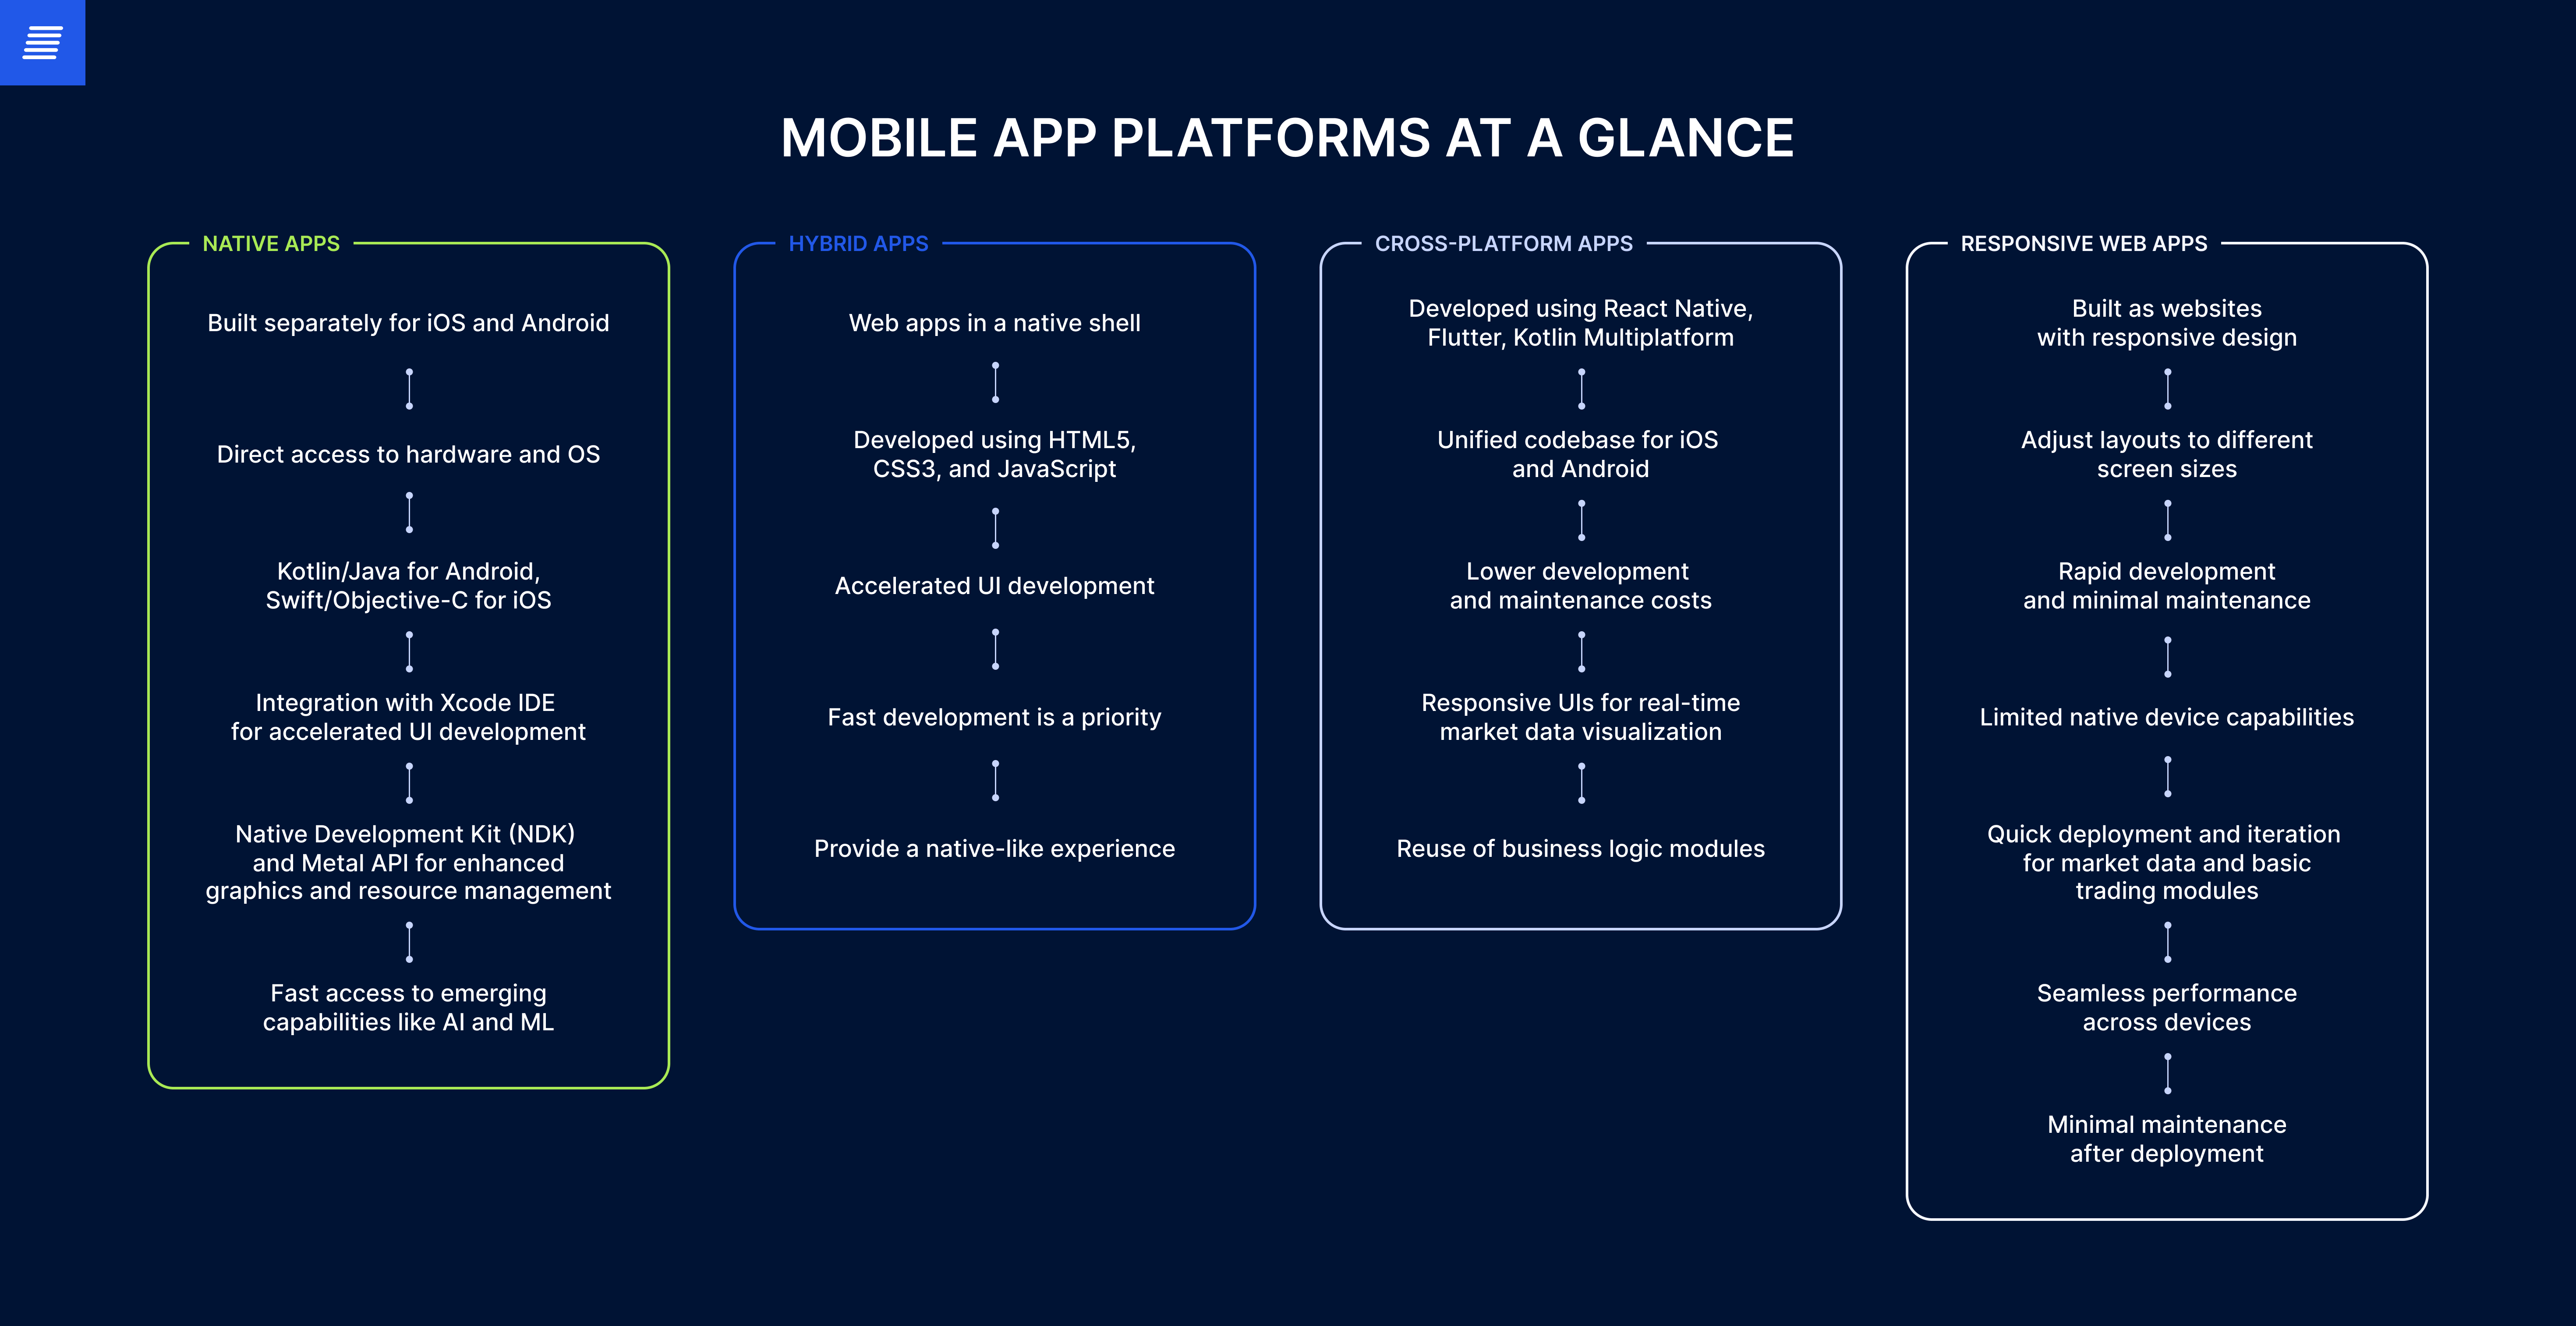 Native, hybrid, cross platforms, responsive web apps: features of each platform